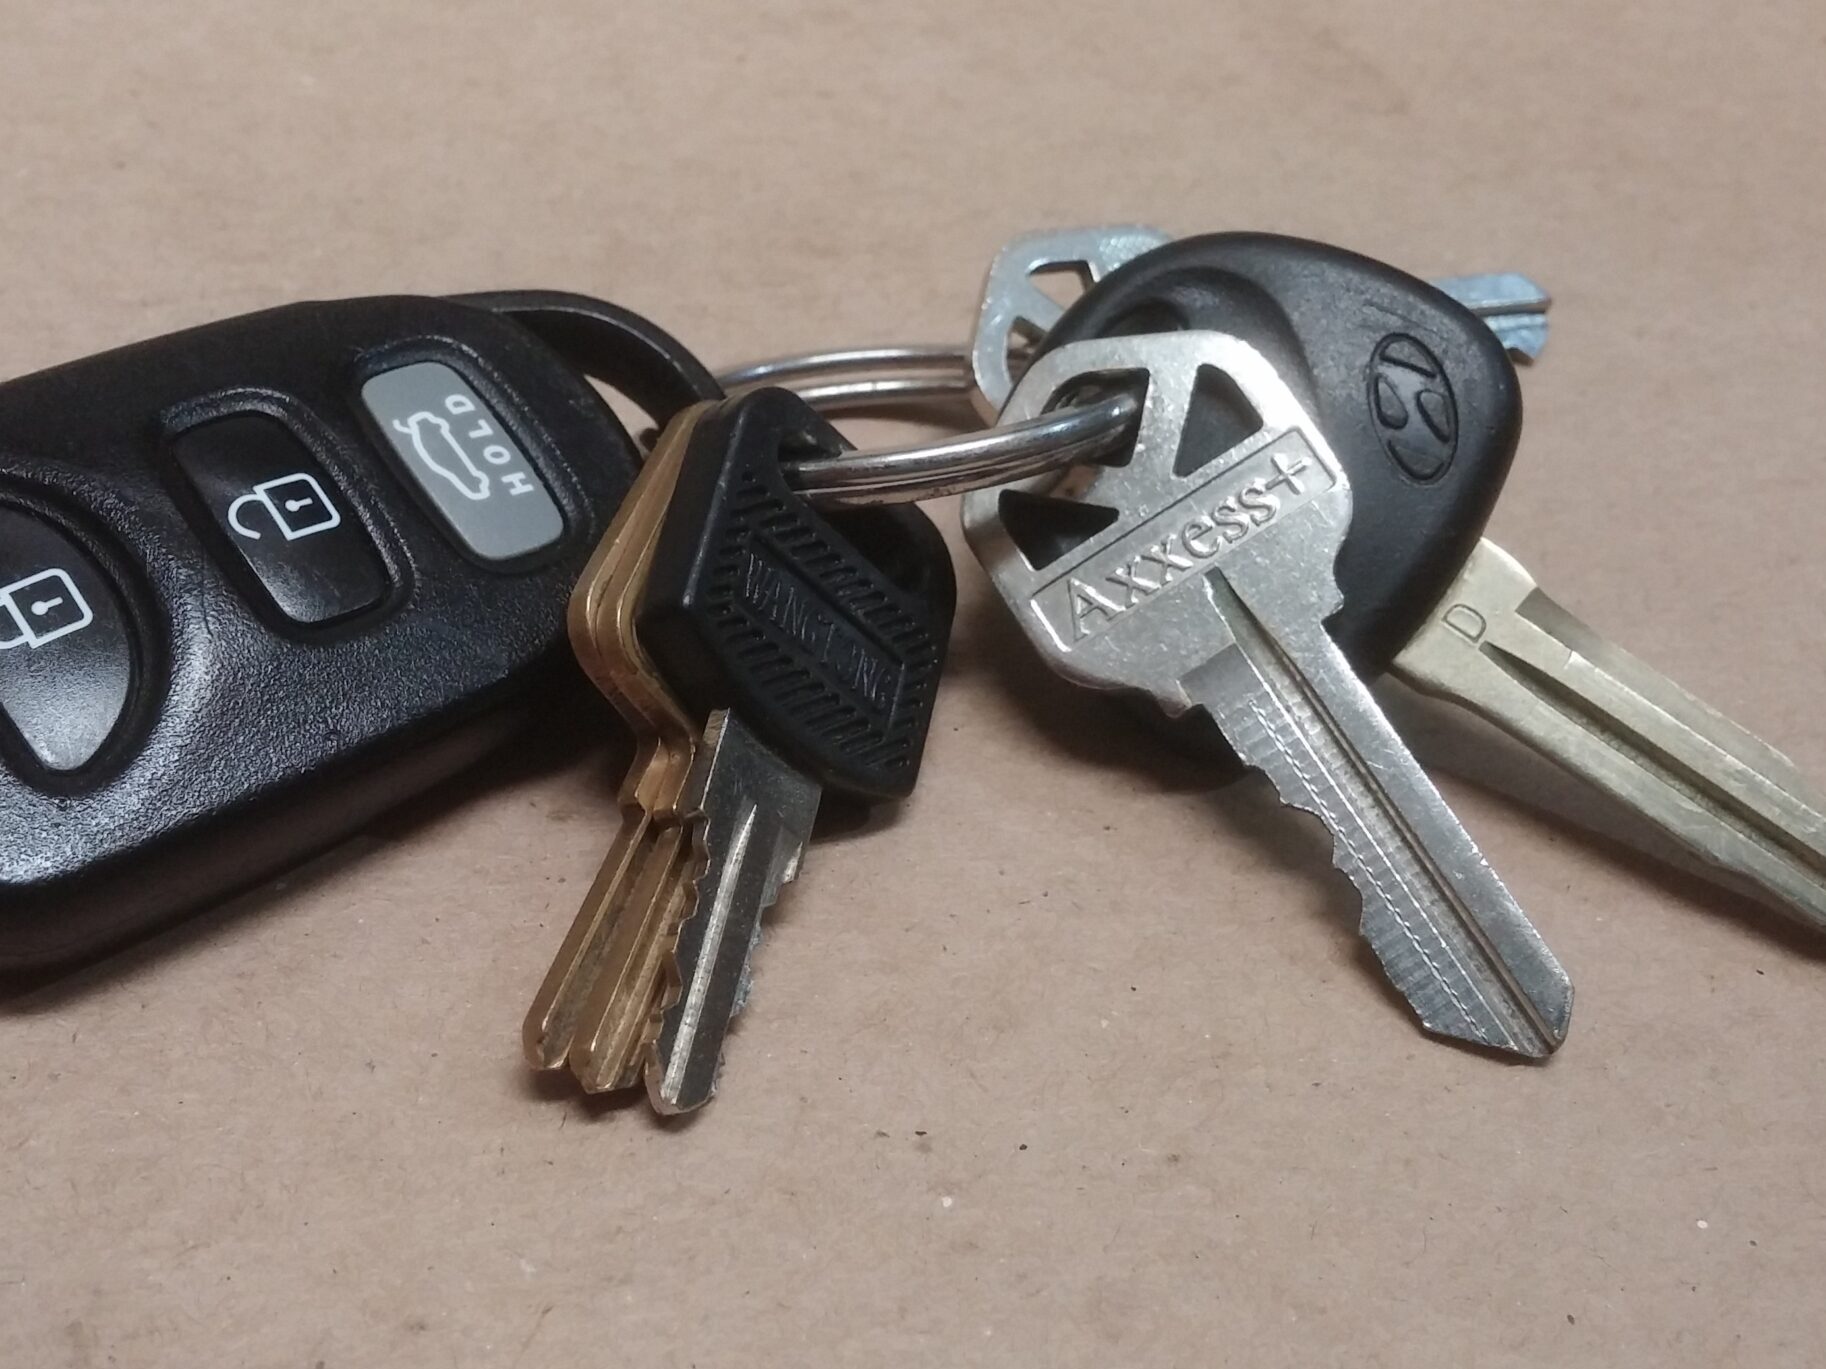 keys locked in my car